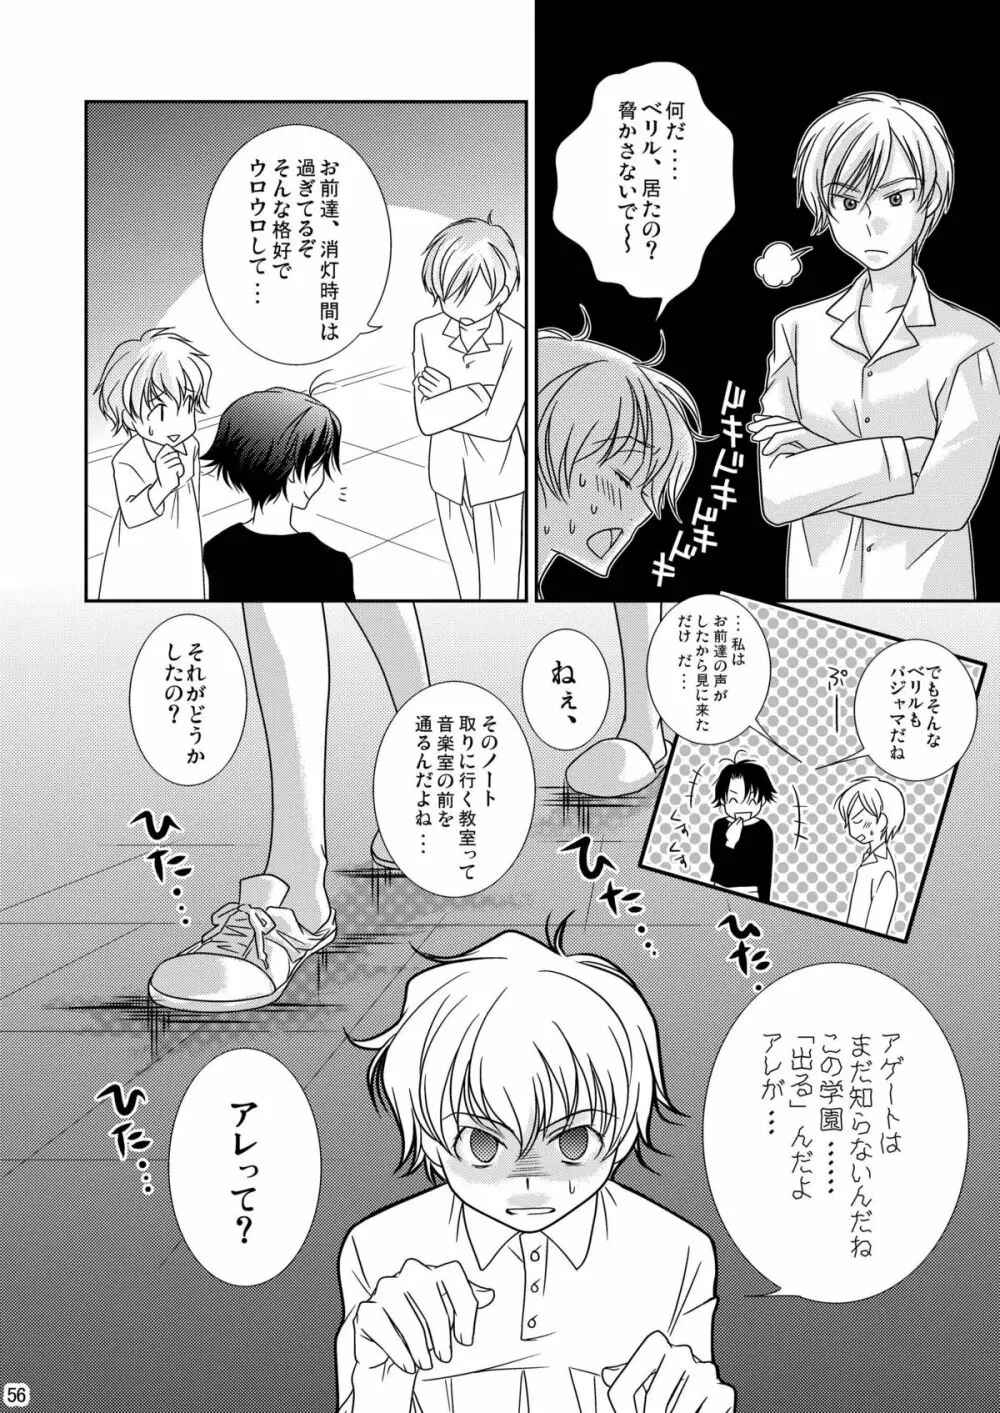 Re: ぷれい2 - page56